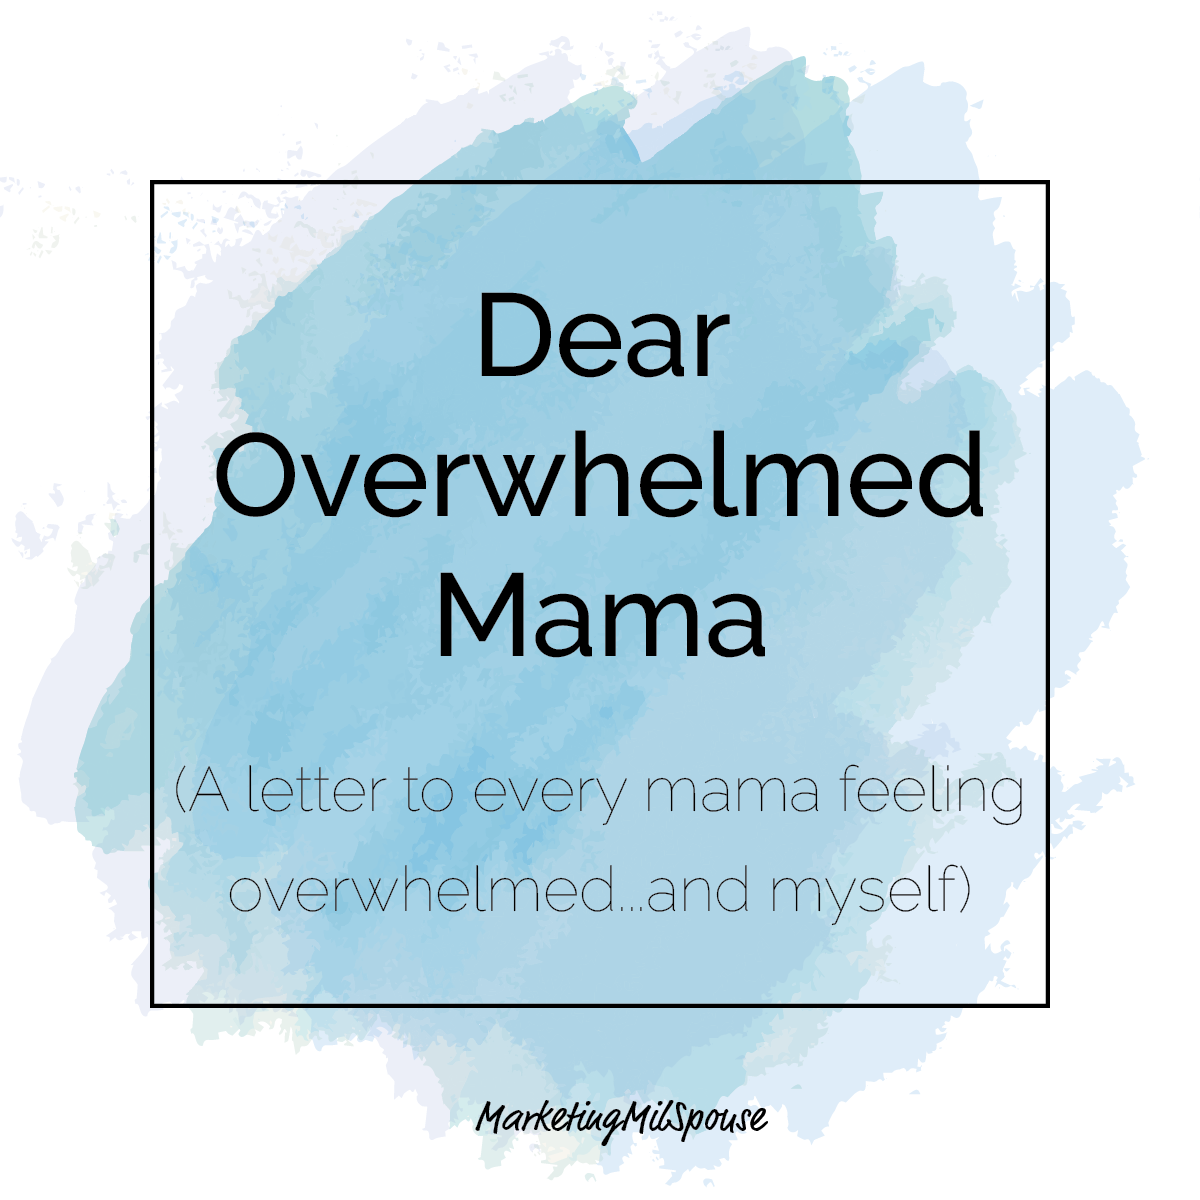 Dear Overwhelmed Mama